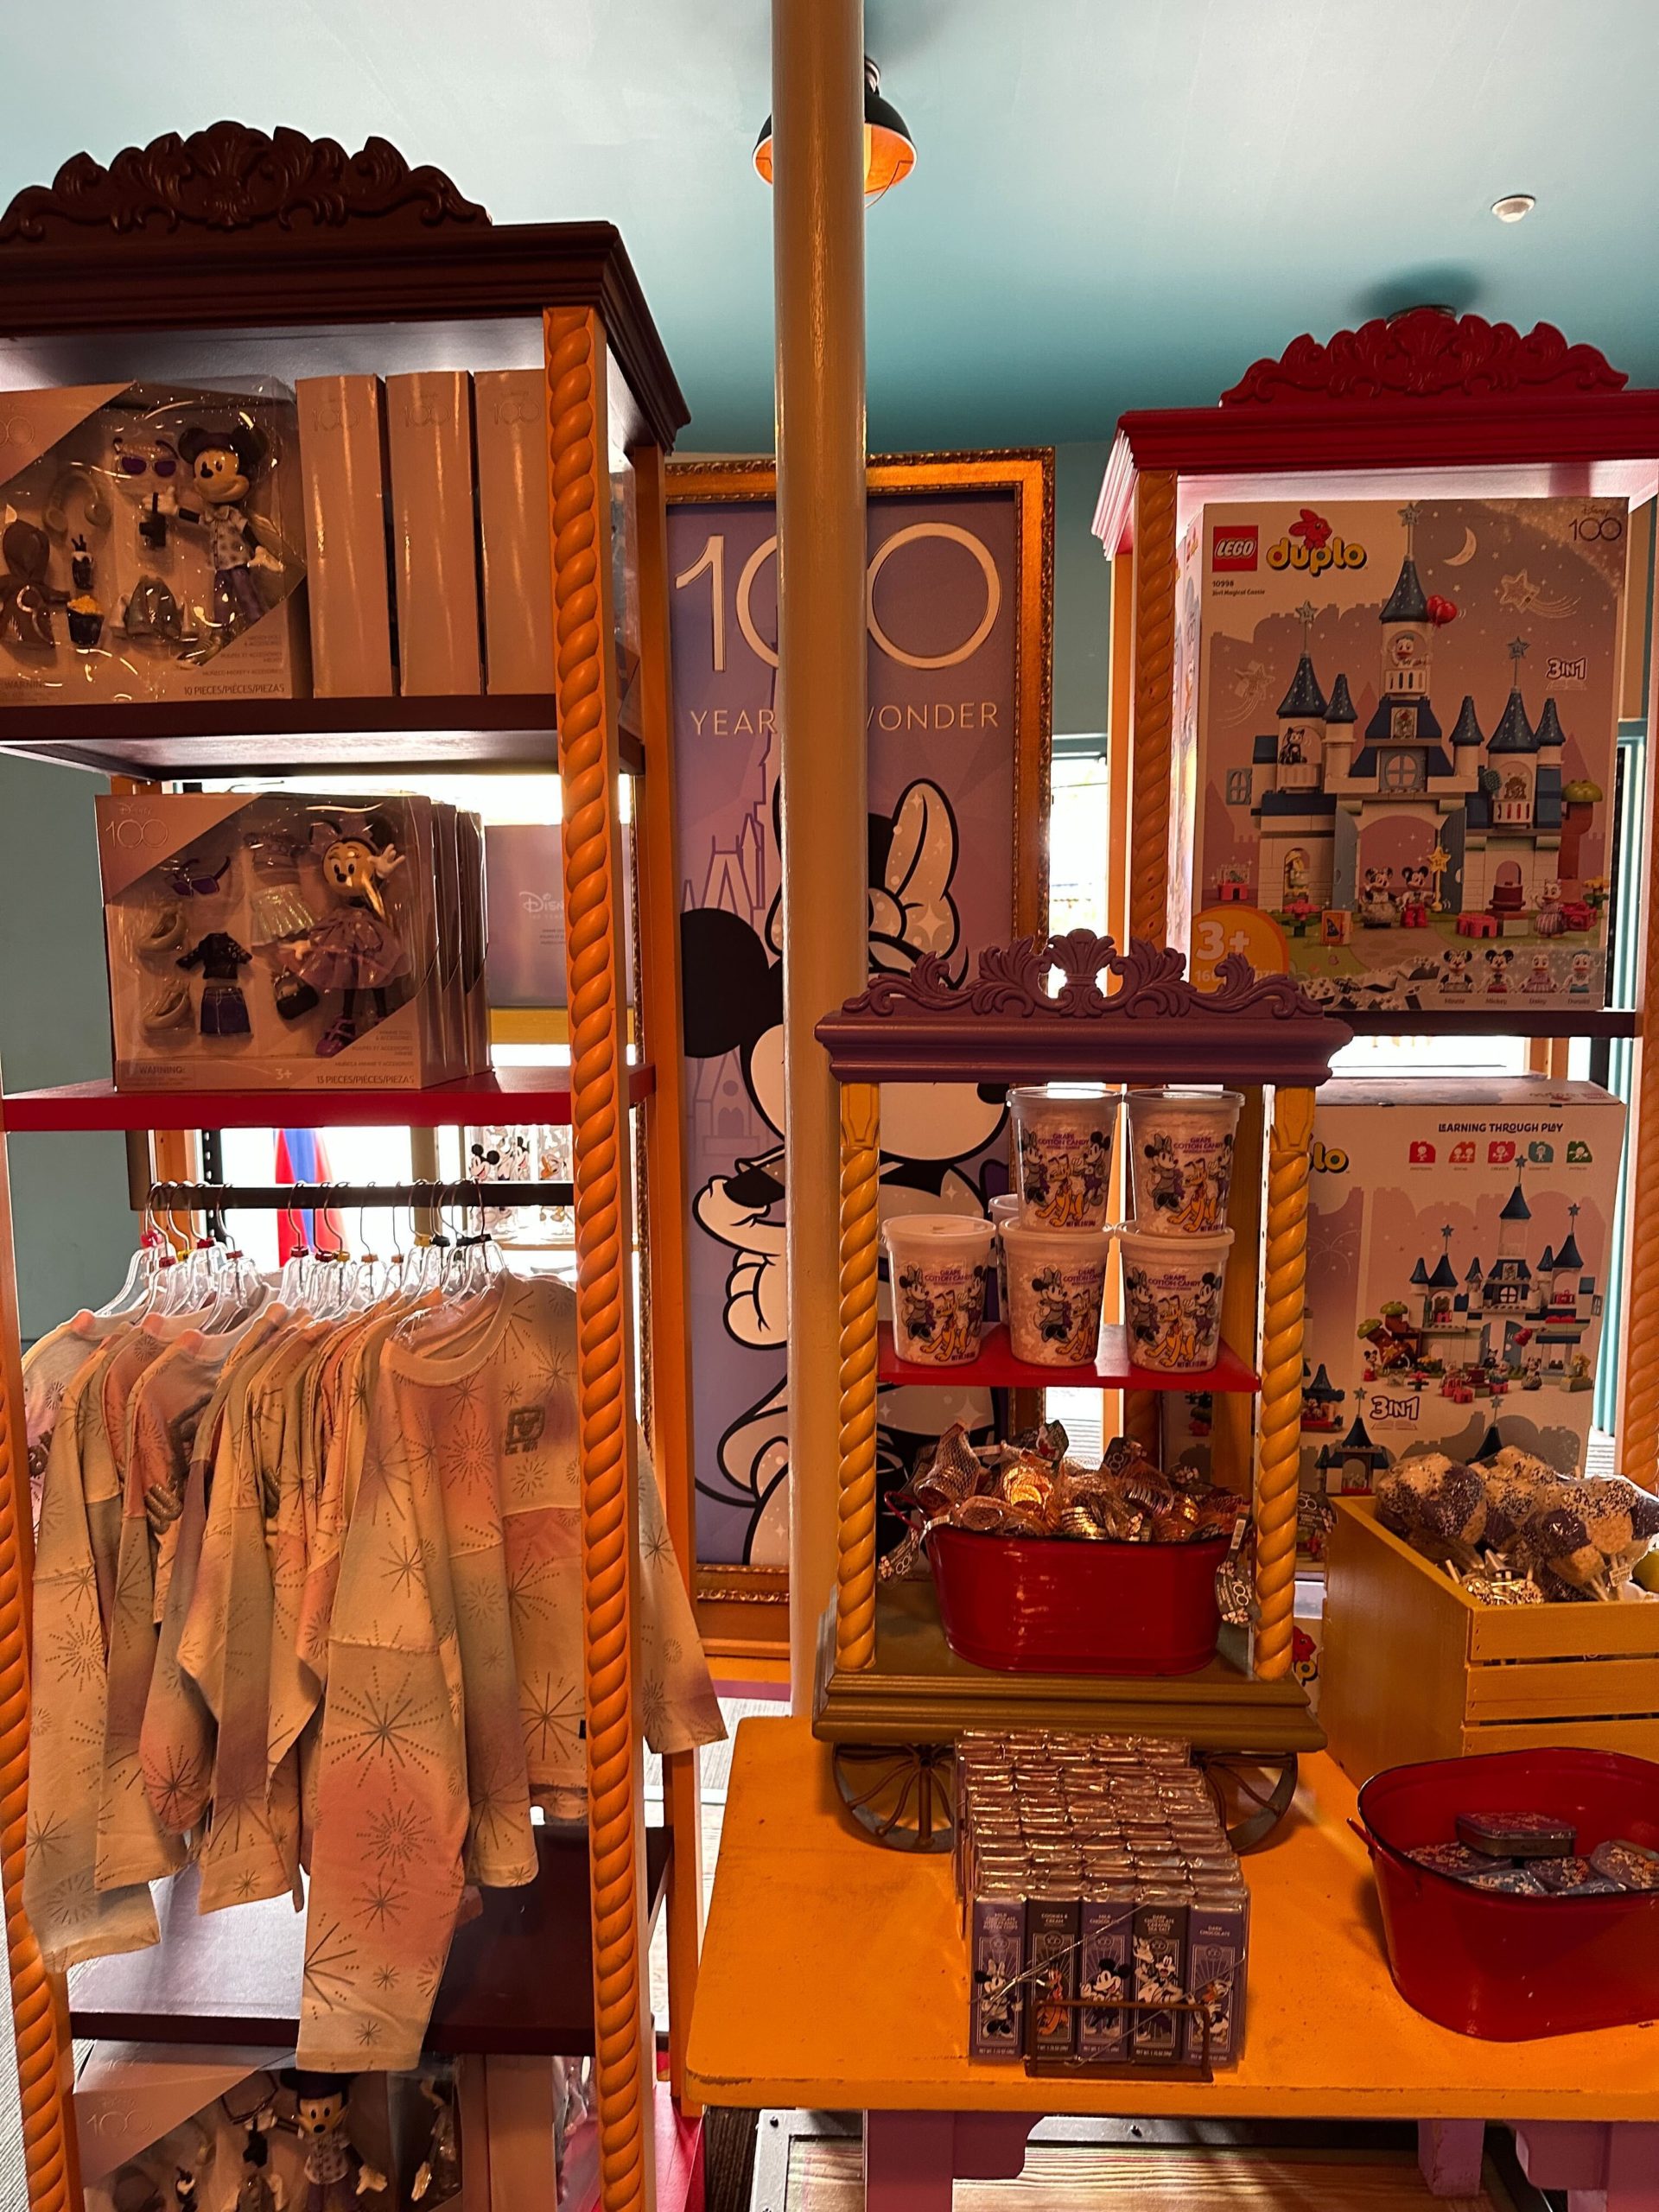 big top souvenirs disney100 merchandise display